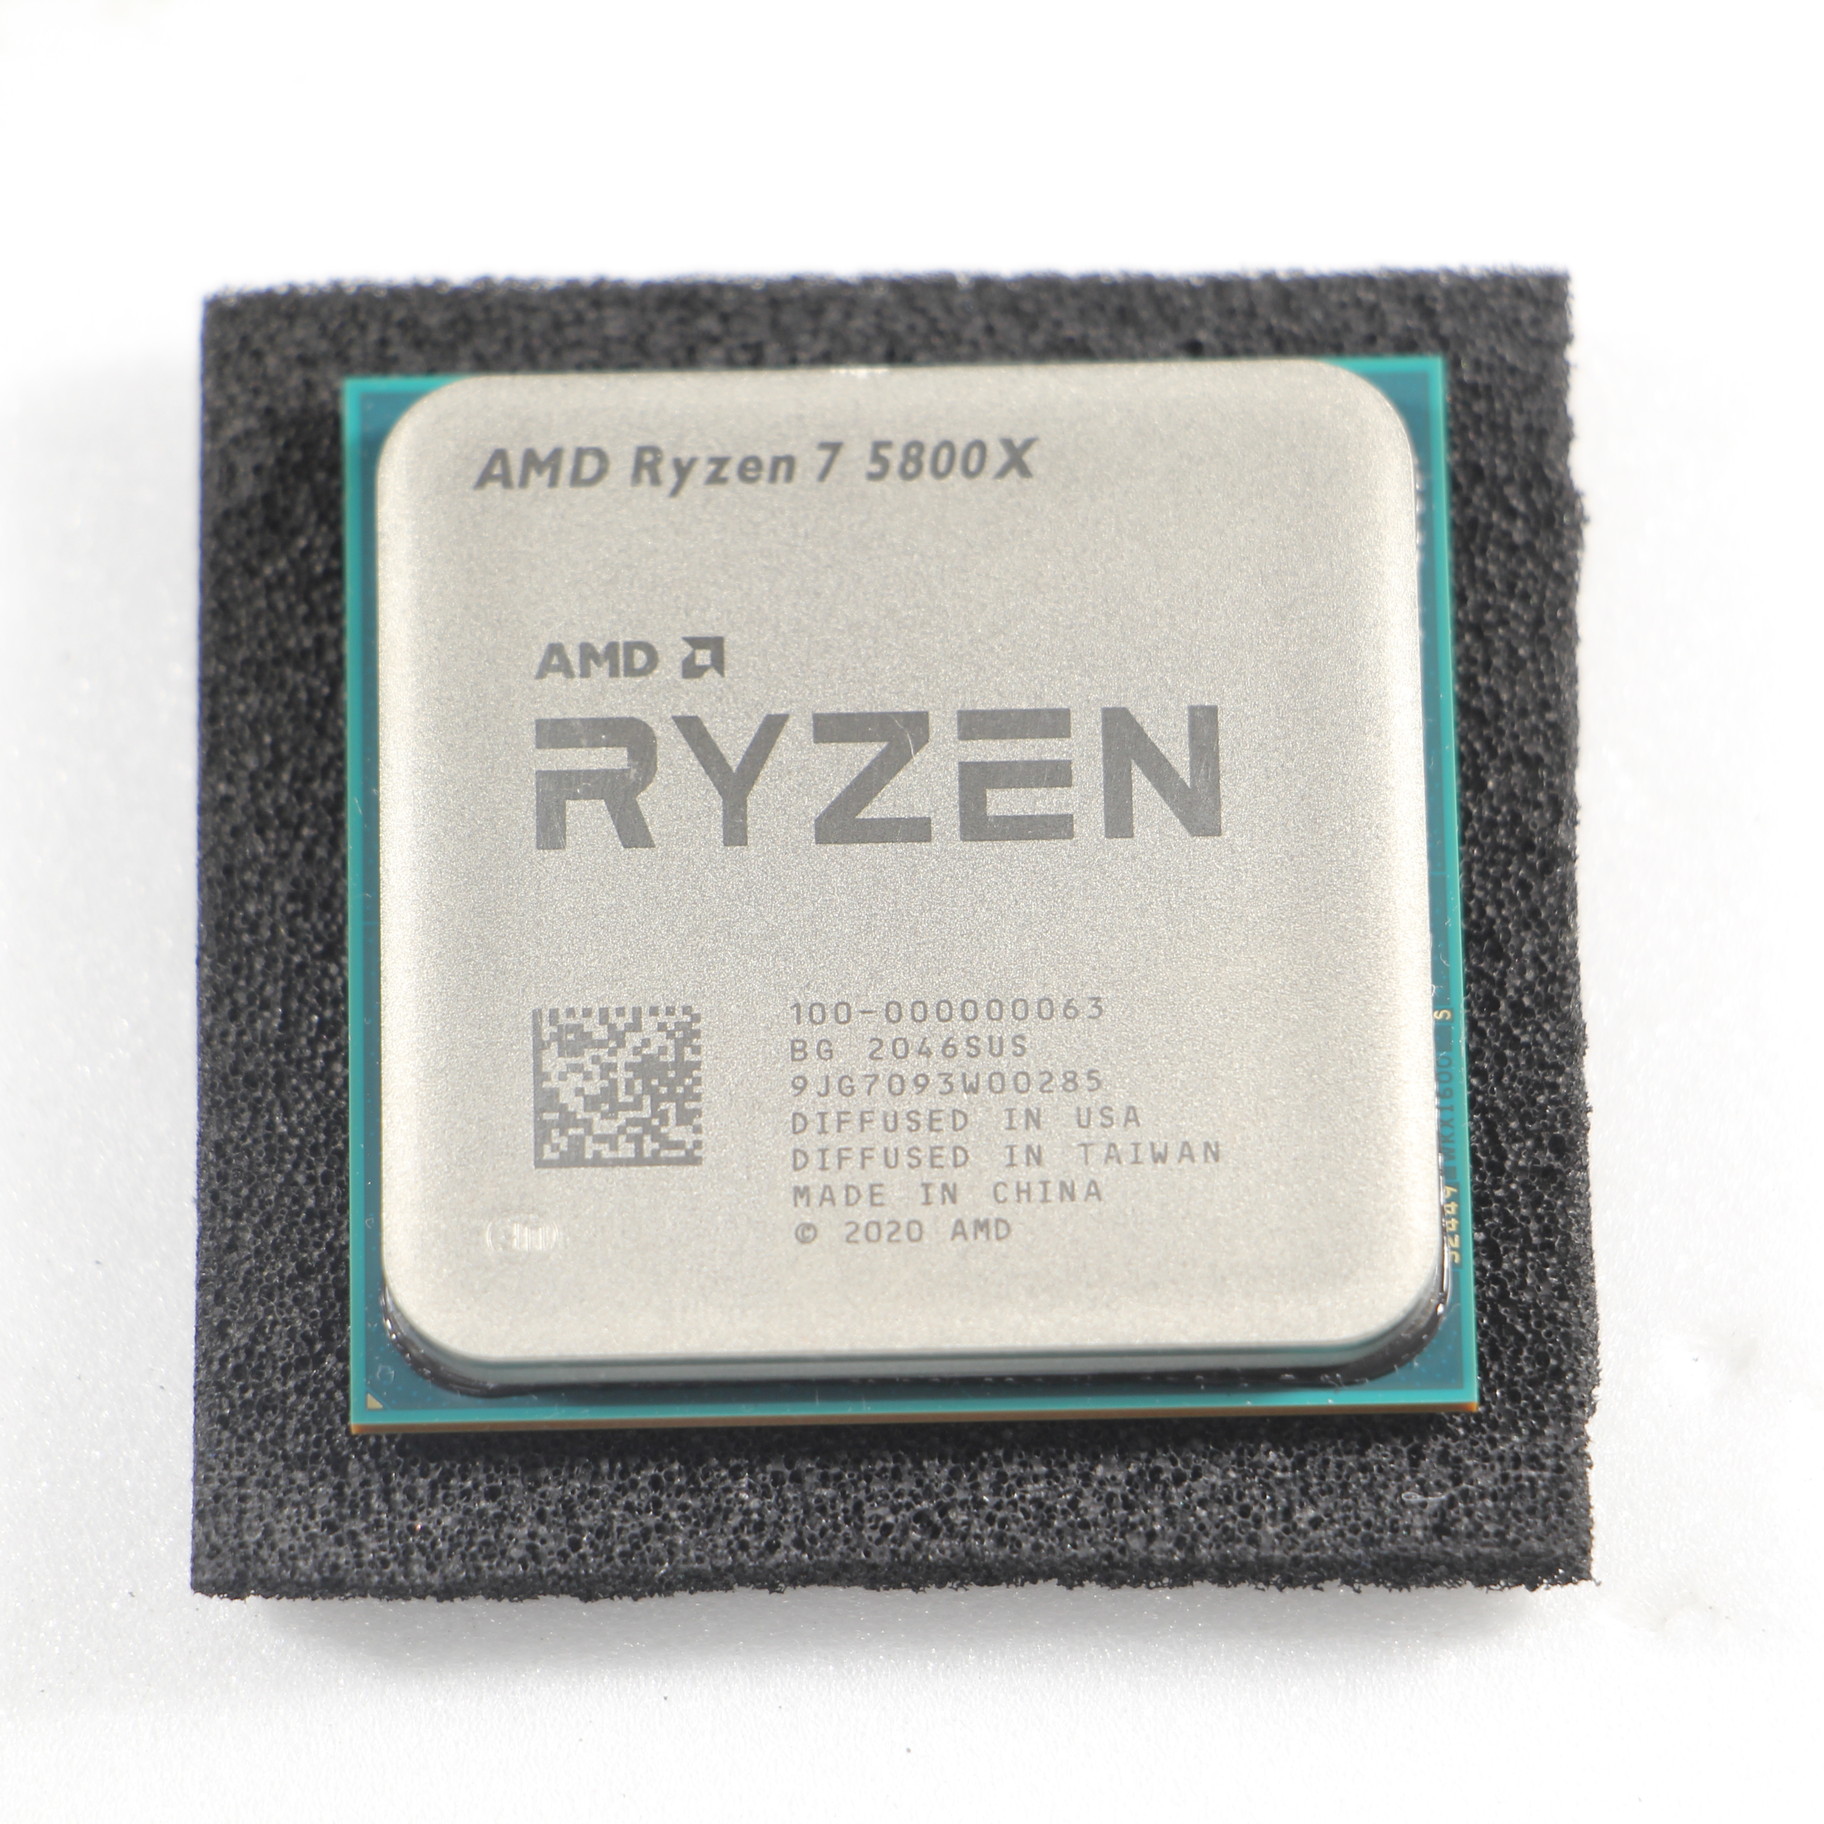 Ryzen 7 5800X